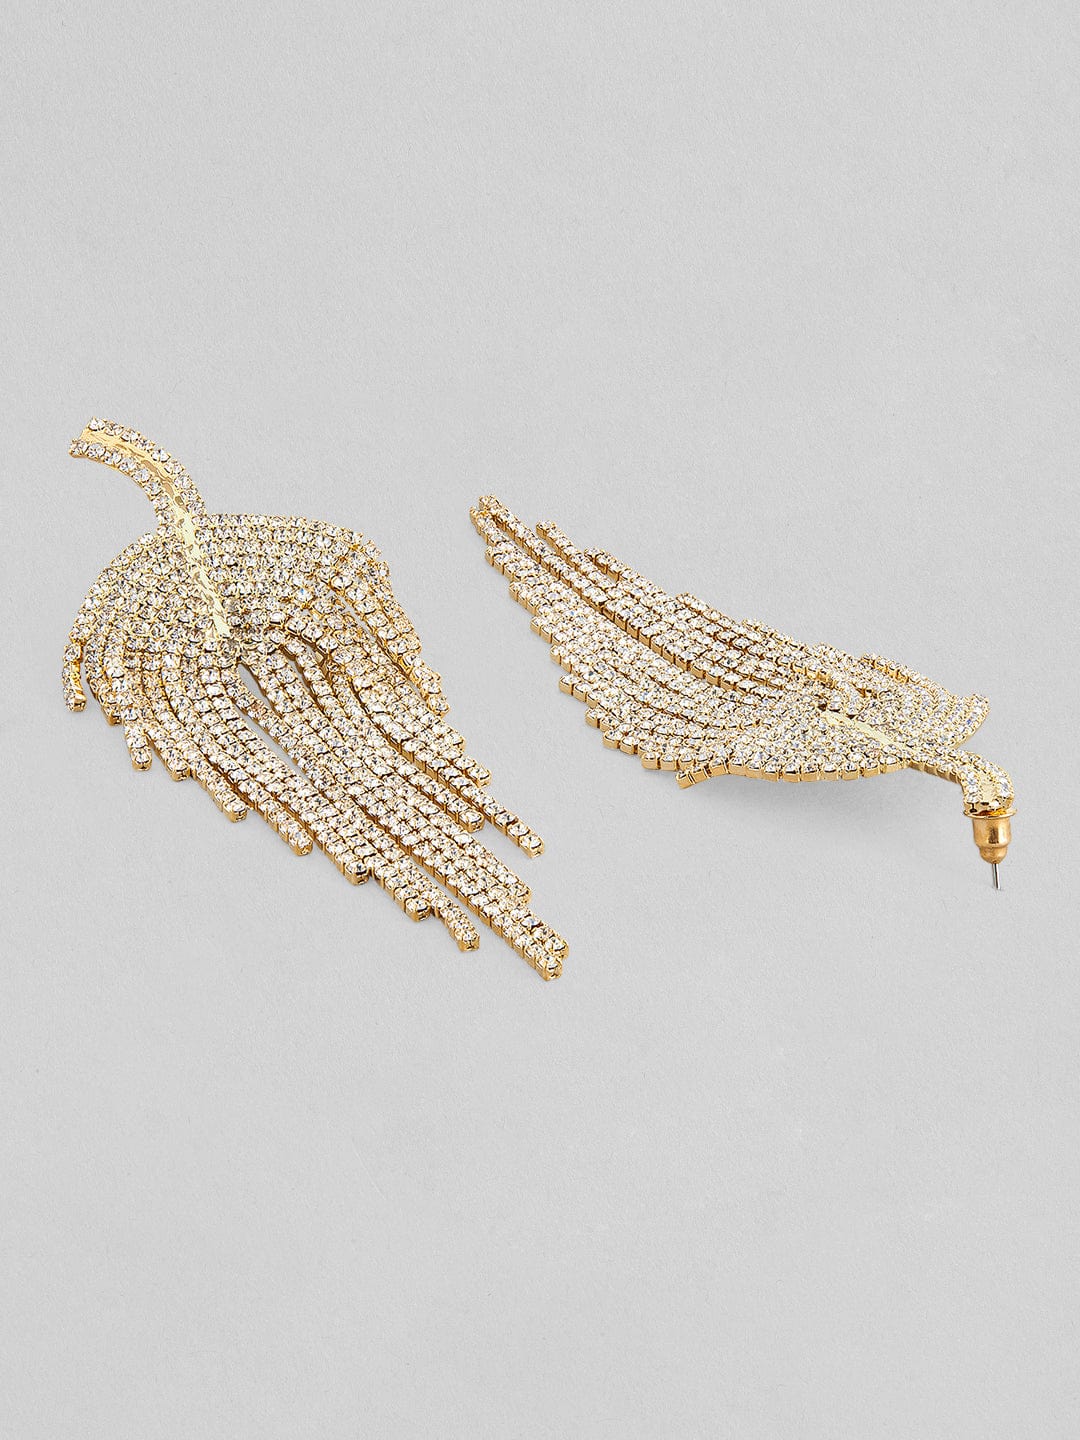 Tokyo Talkies X Rubans Fashion Accessories Gold-Toned Contemporary Drop Earrings Earrings